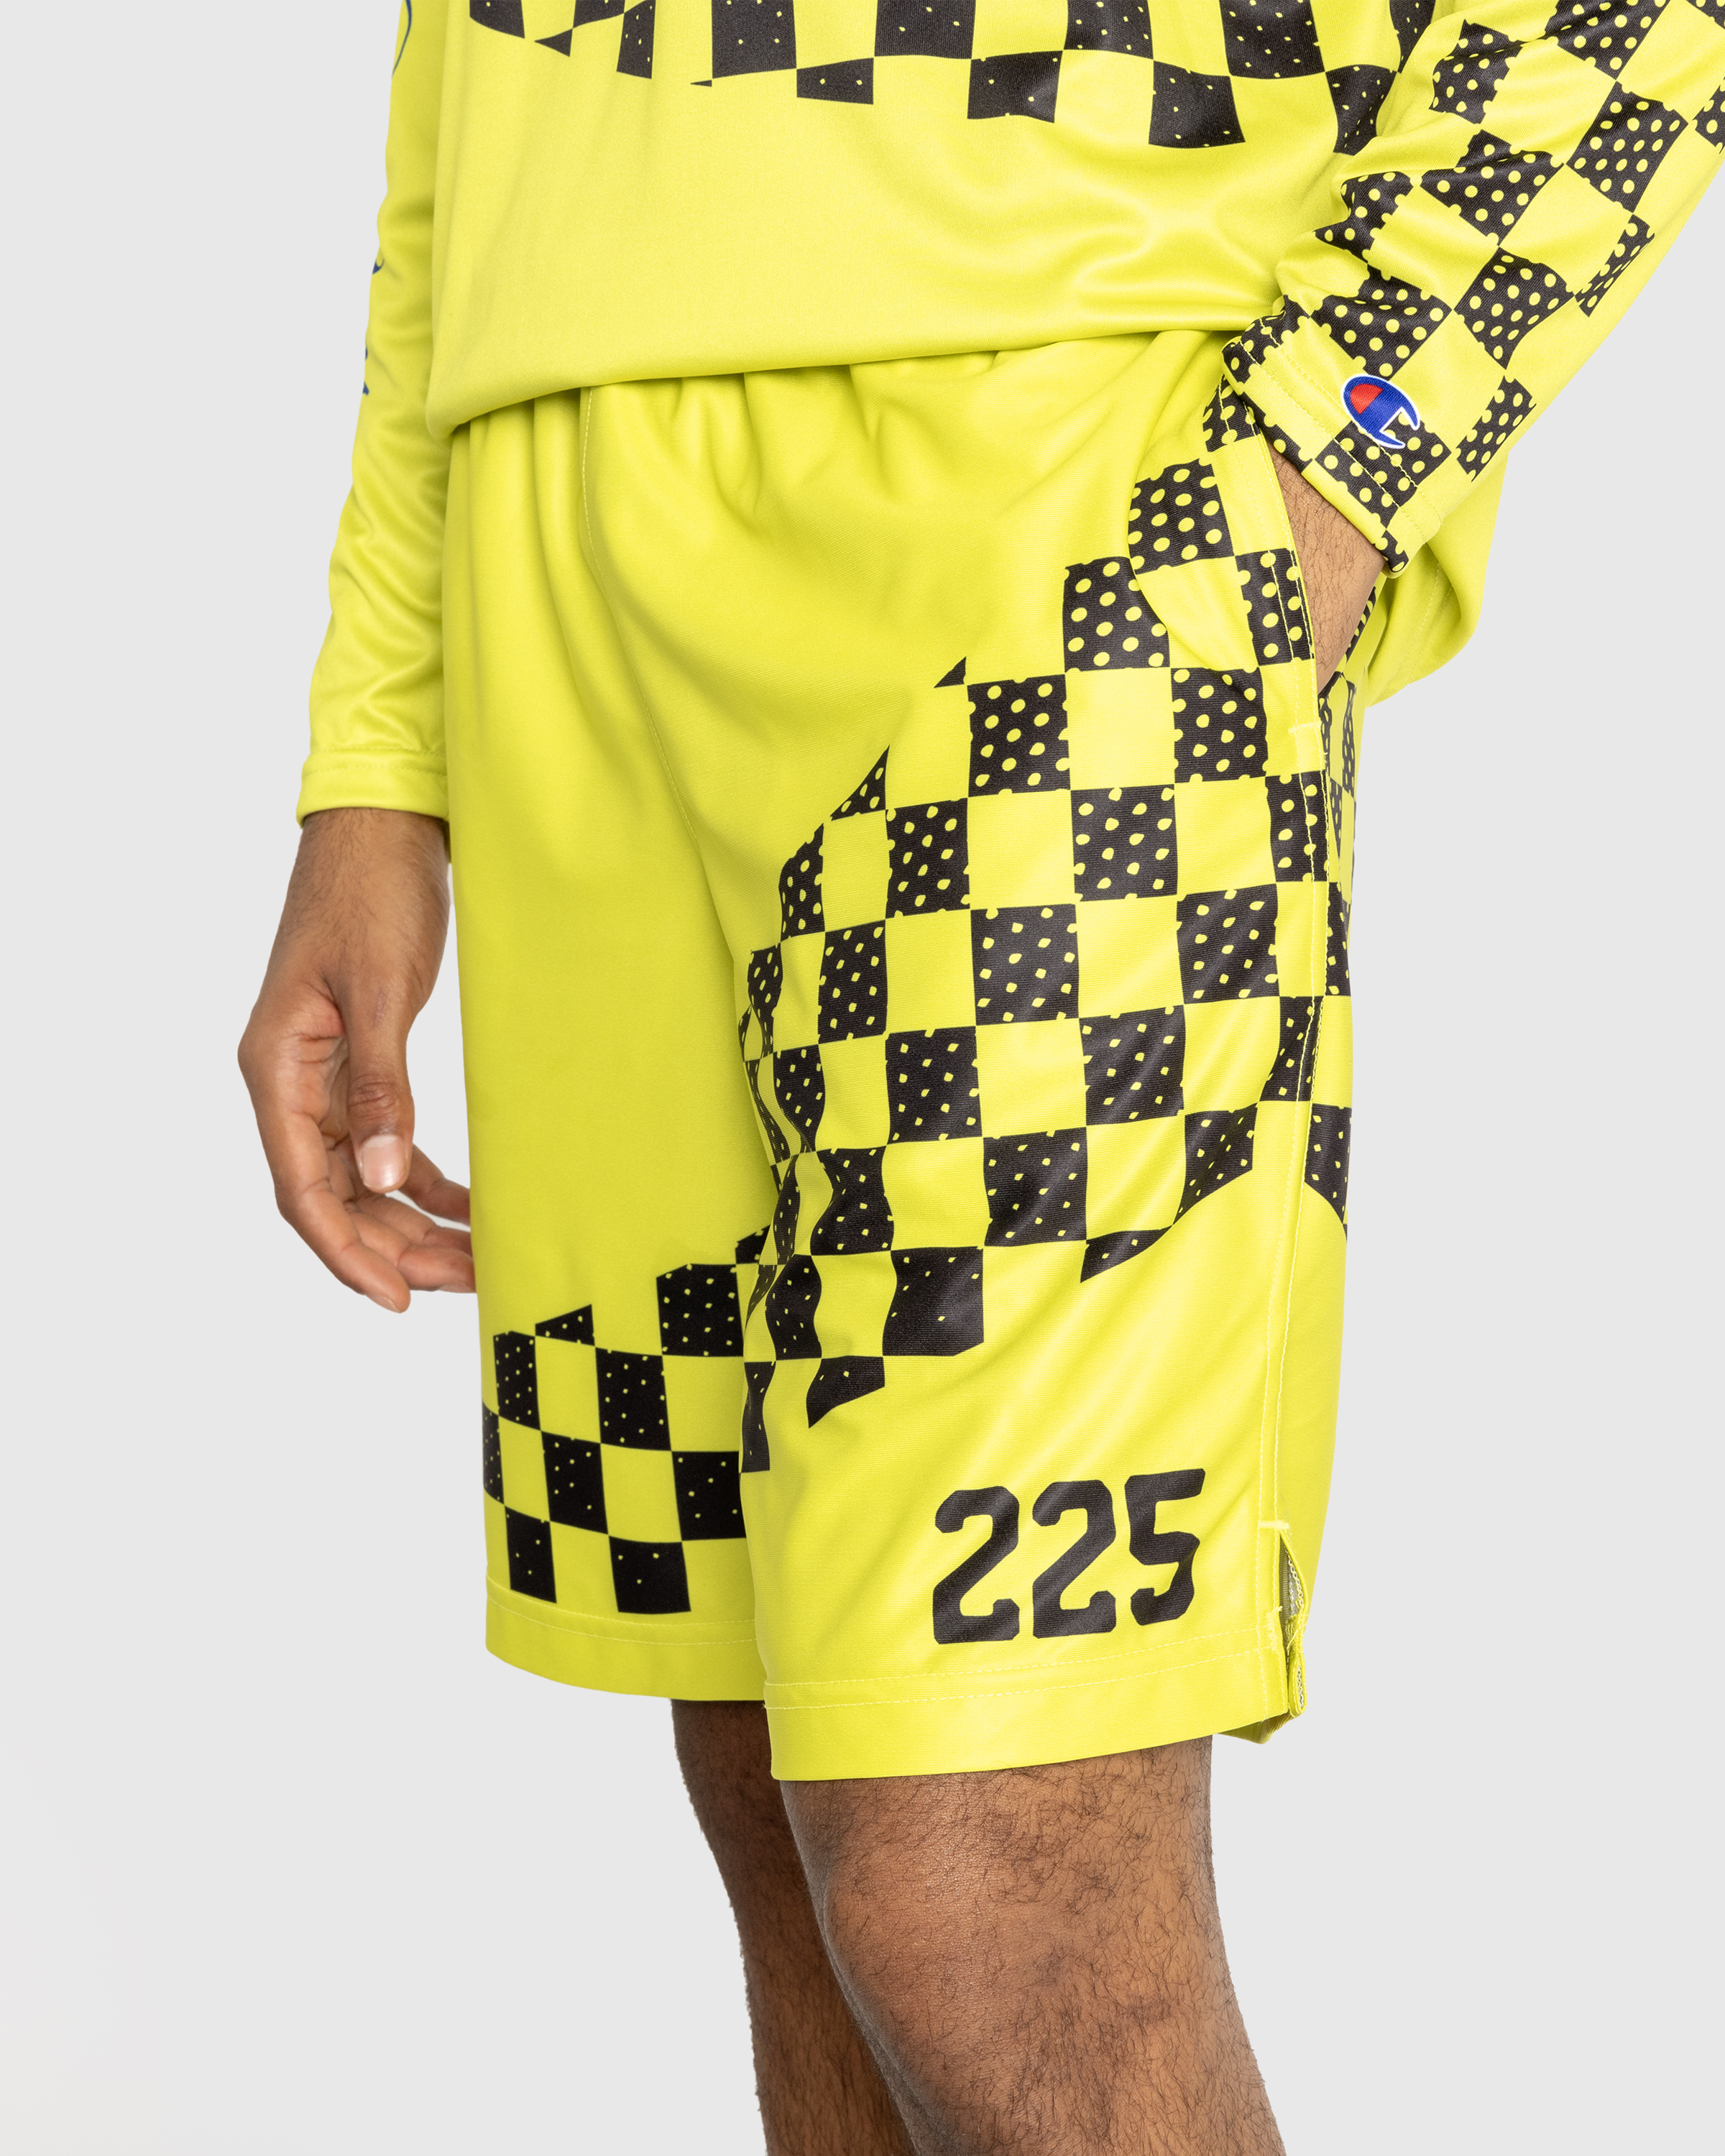 Champion x Highsnobiety x La Sunday – Abidjan Shorts Yellow/Black - Bermuda Cuts - Yellow - Image 6